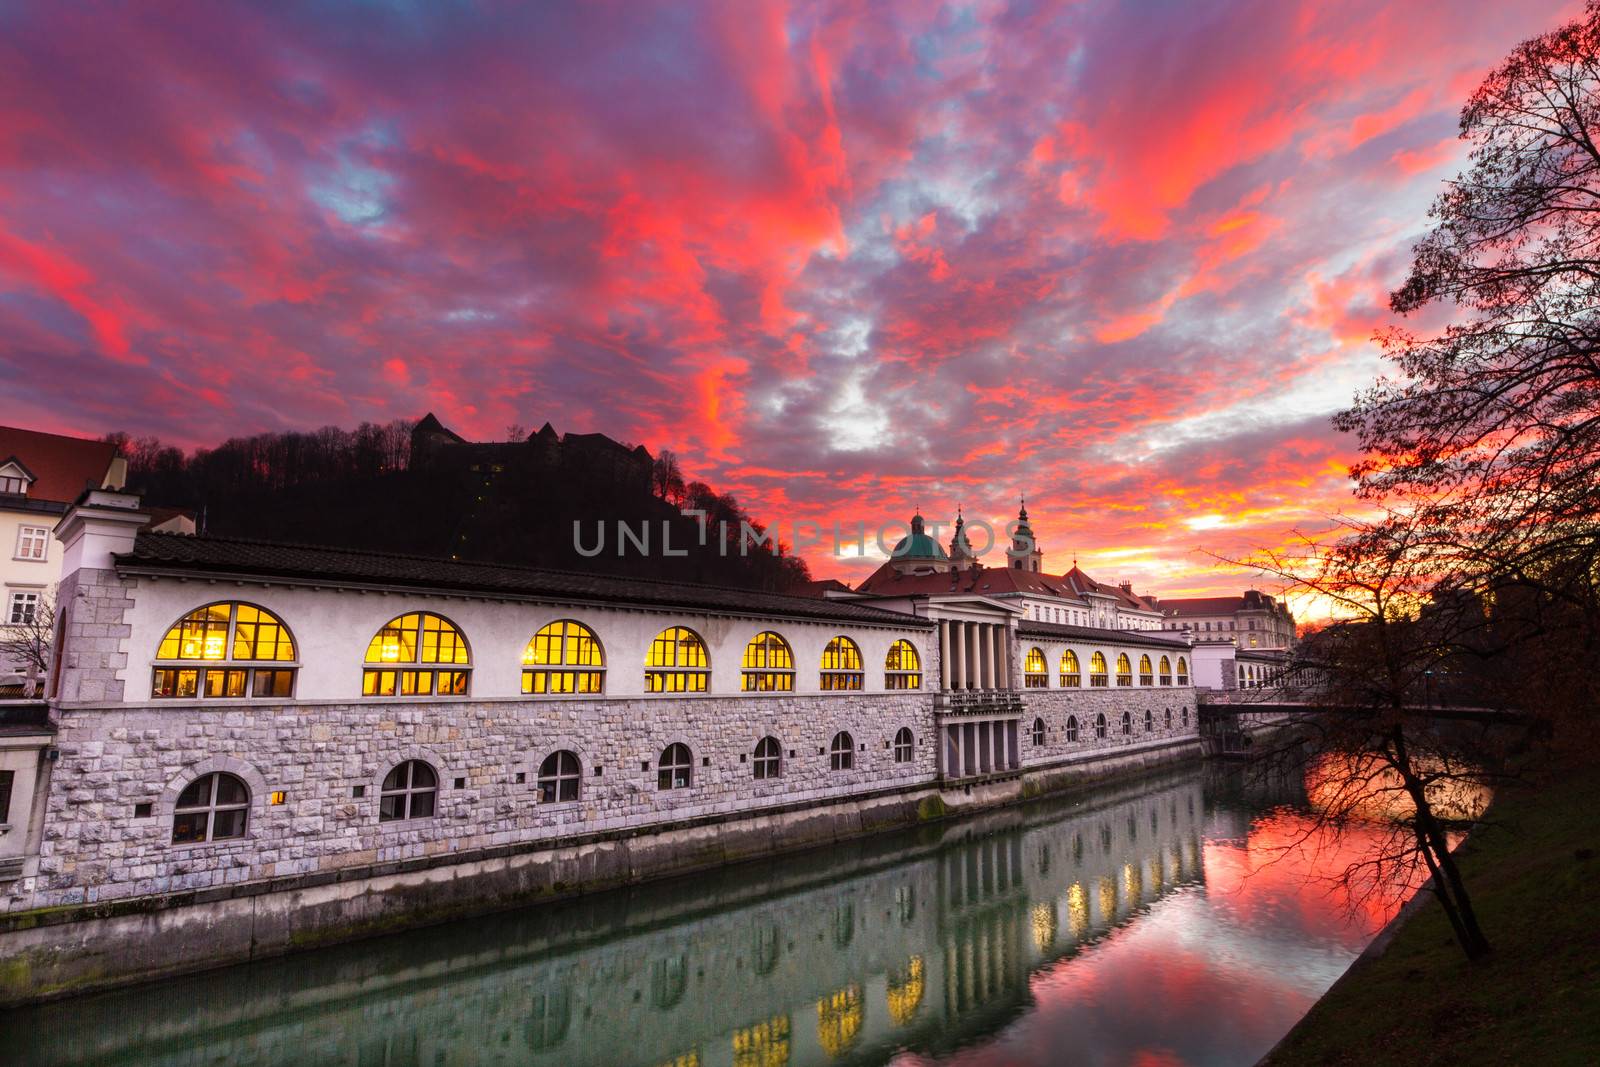 Ljubljana, Slovenia, Europe - Ljubljanica River and Central Market in sunset.  Ljubljana open market buildings was designed by famous architect Jo��e Plecnik.